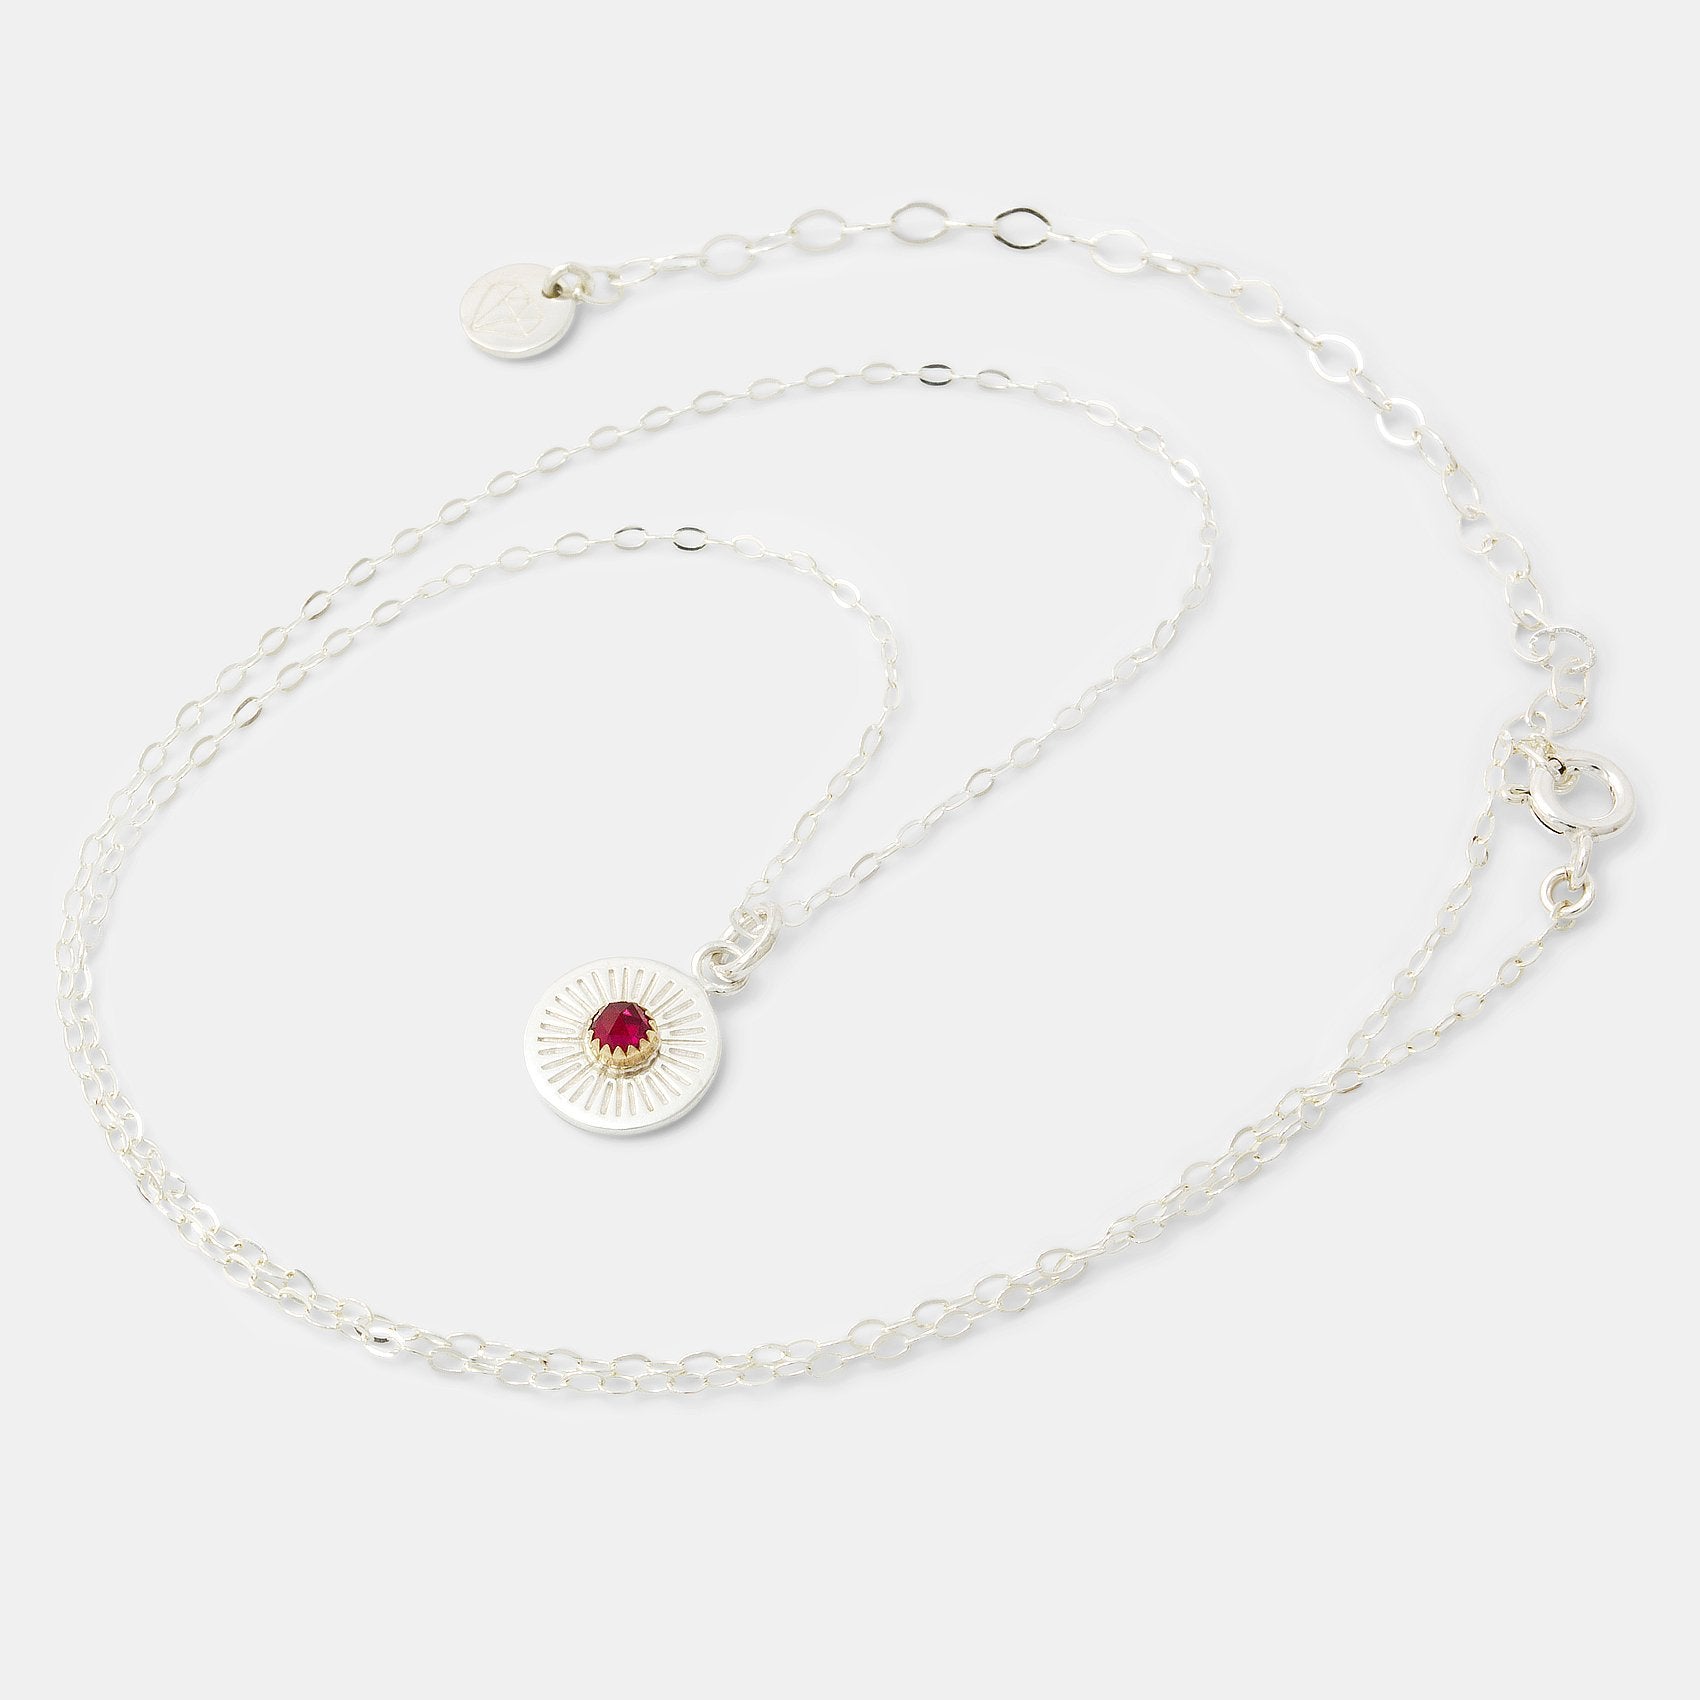 Birthstone pendant: ruby - Simone Walsh Jewellery Australia